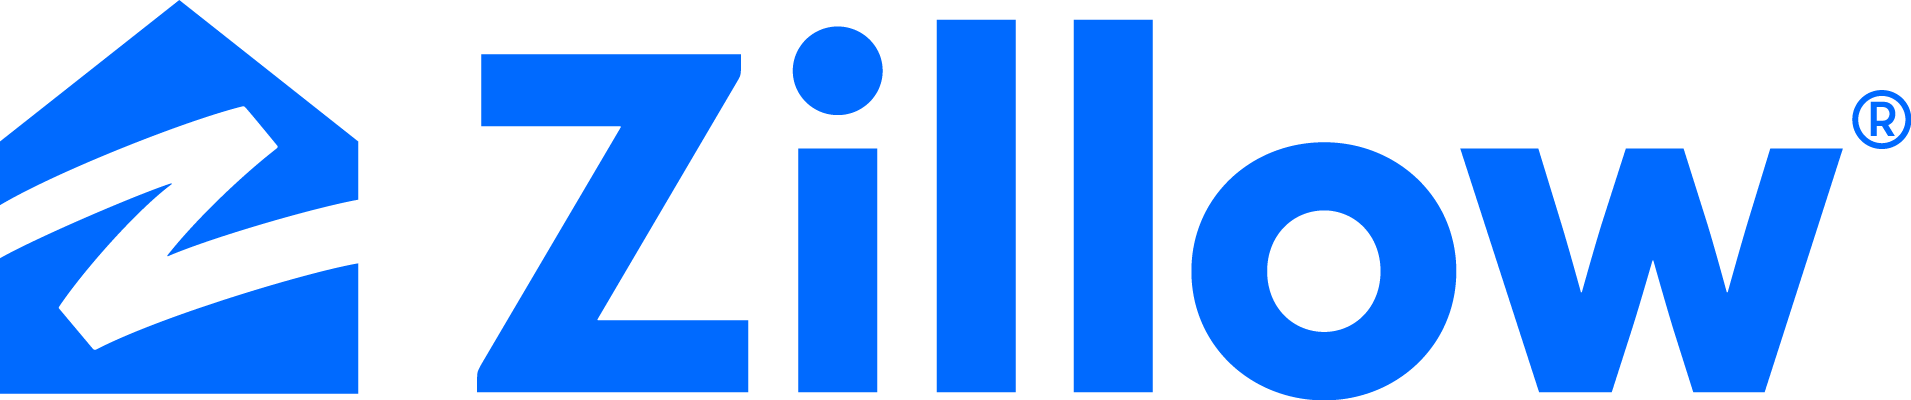 Logo zillow.com